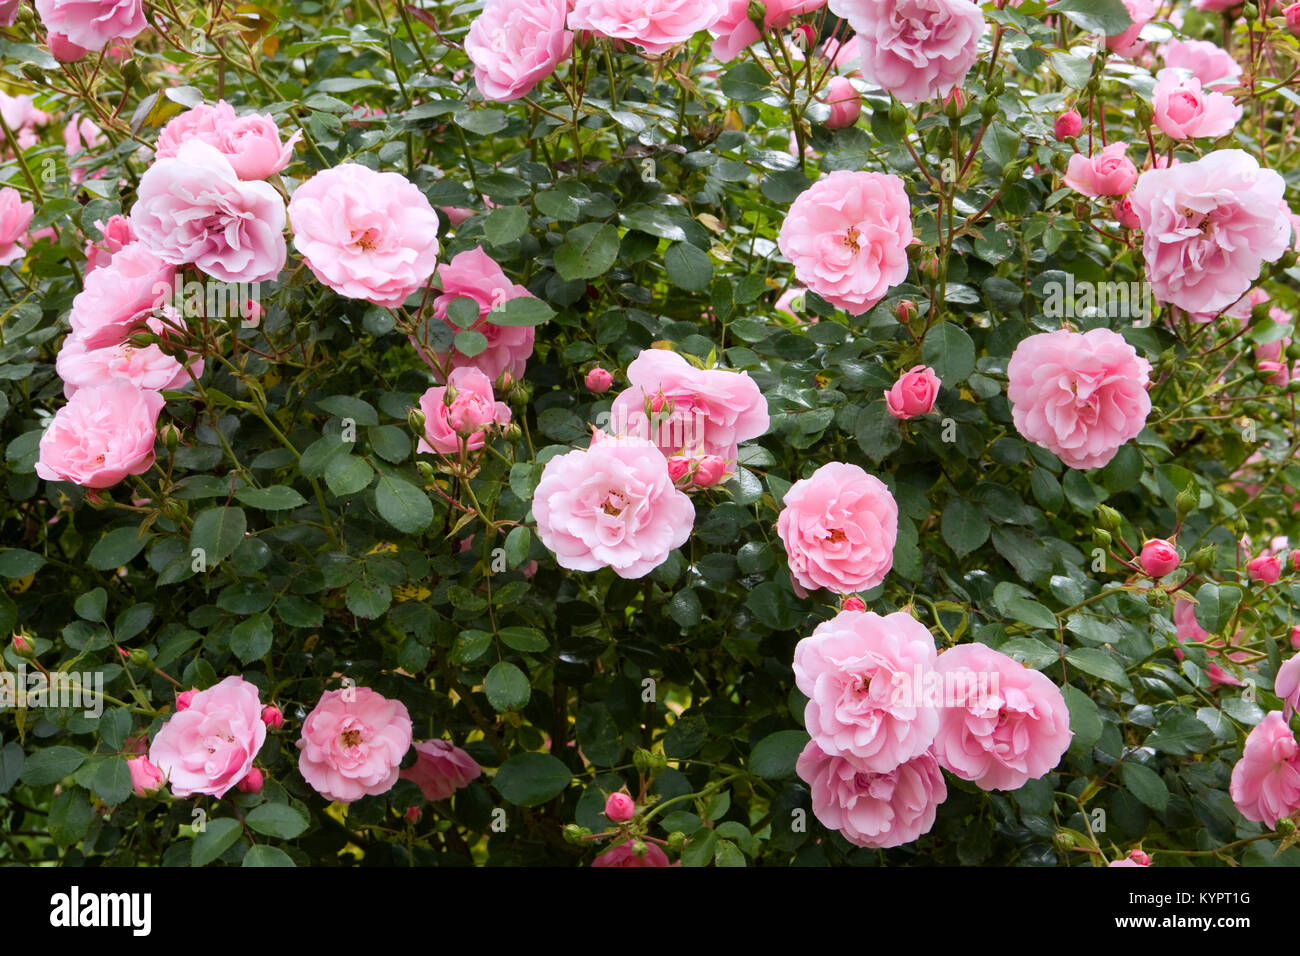 Profuse pink bush roses flowering Stock Photo